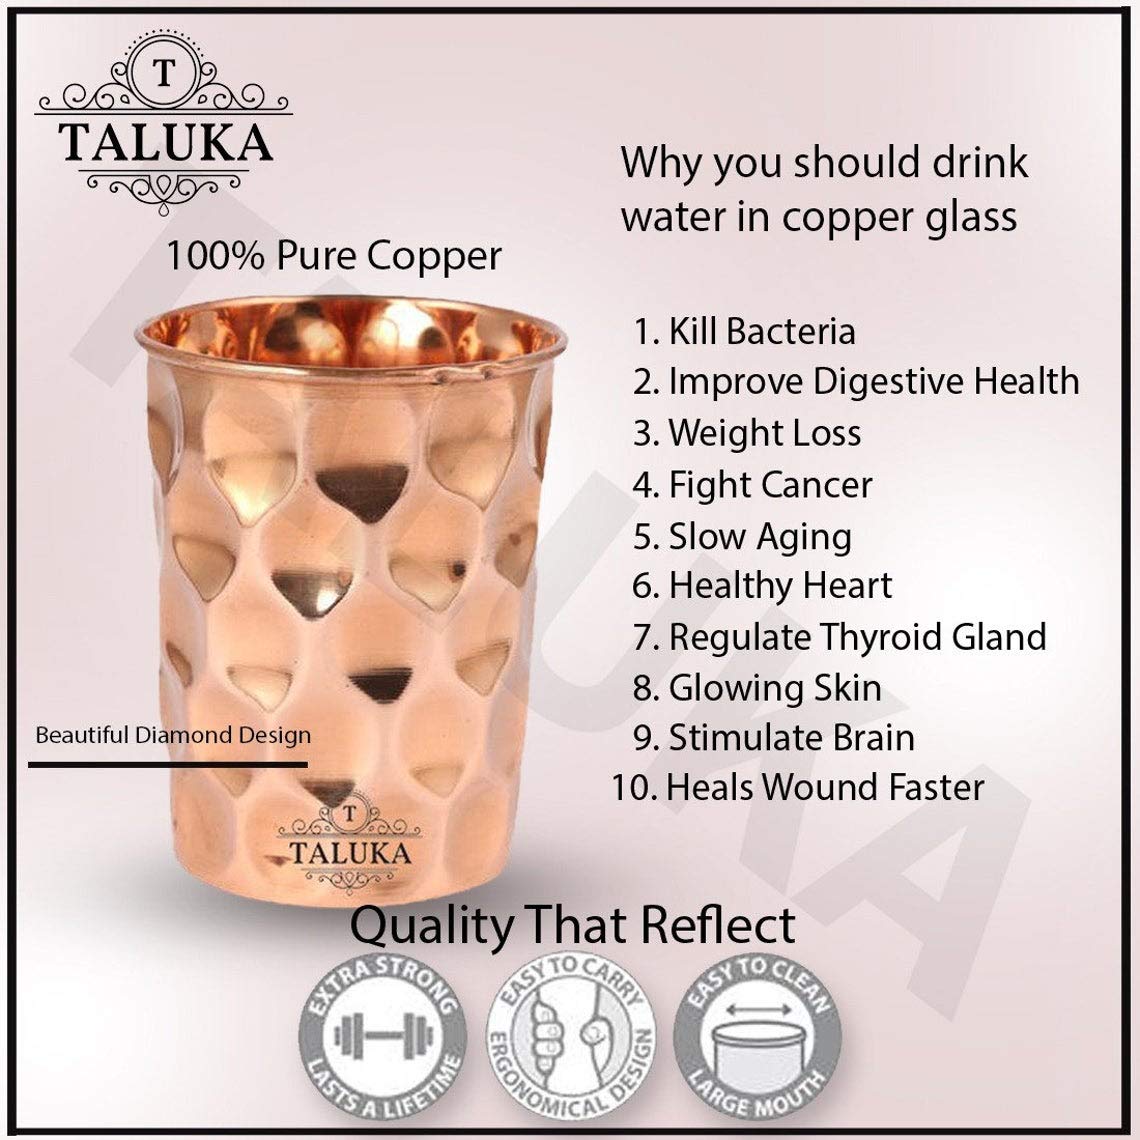 Taluka Copper Diamond Design Set of Jug 1500 ML with 2 Glass, Copper Drinkware Gift Set, Use Hotel Home Restaurant